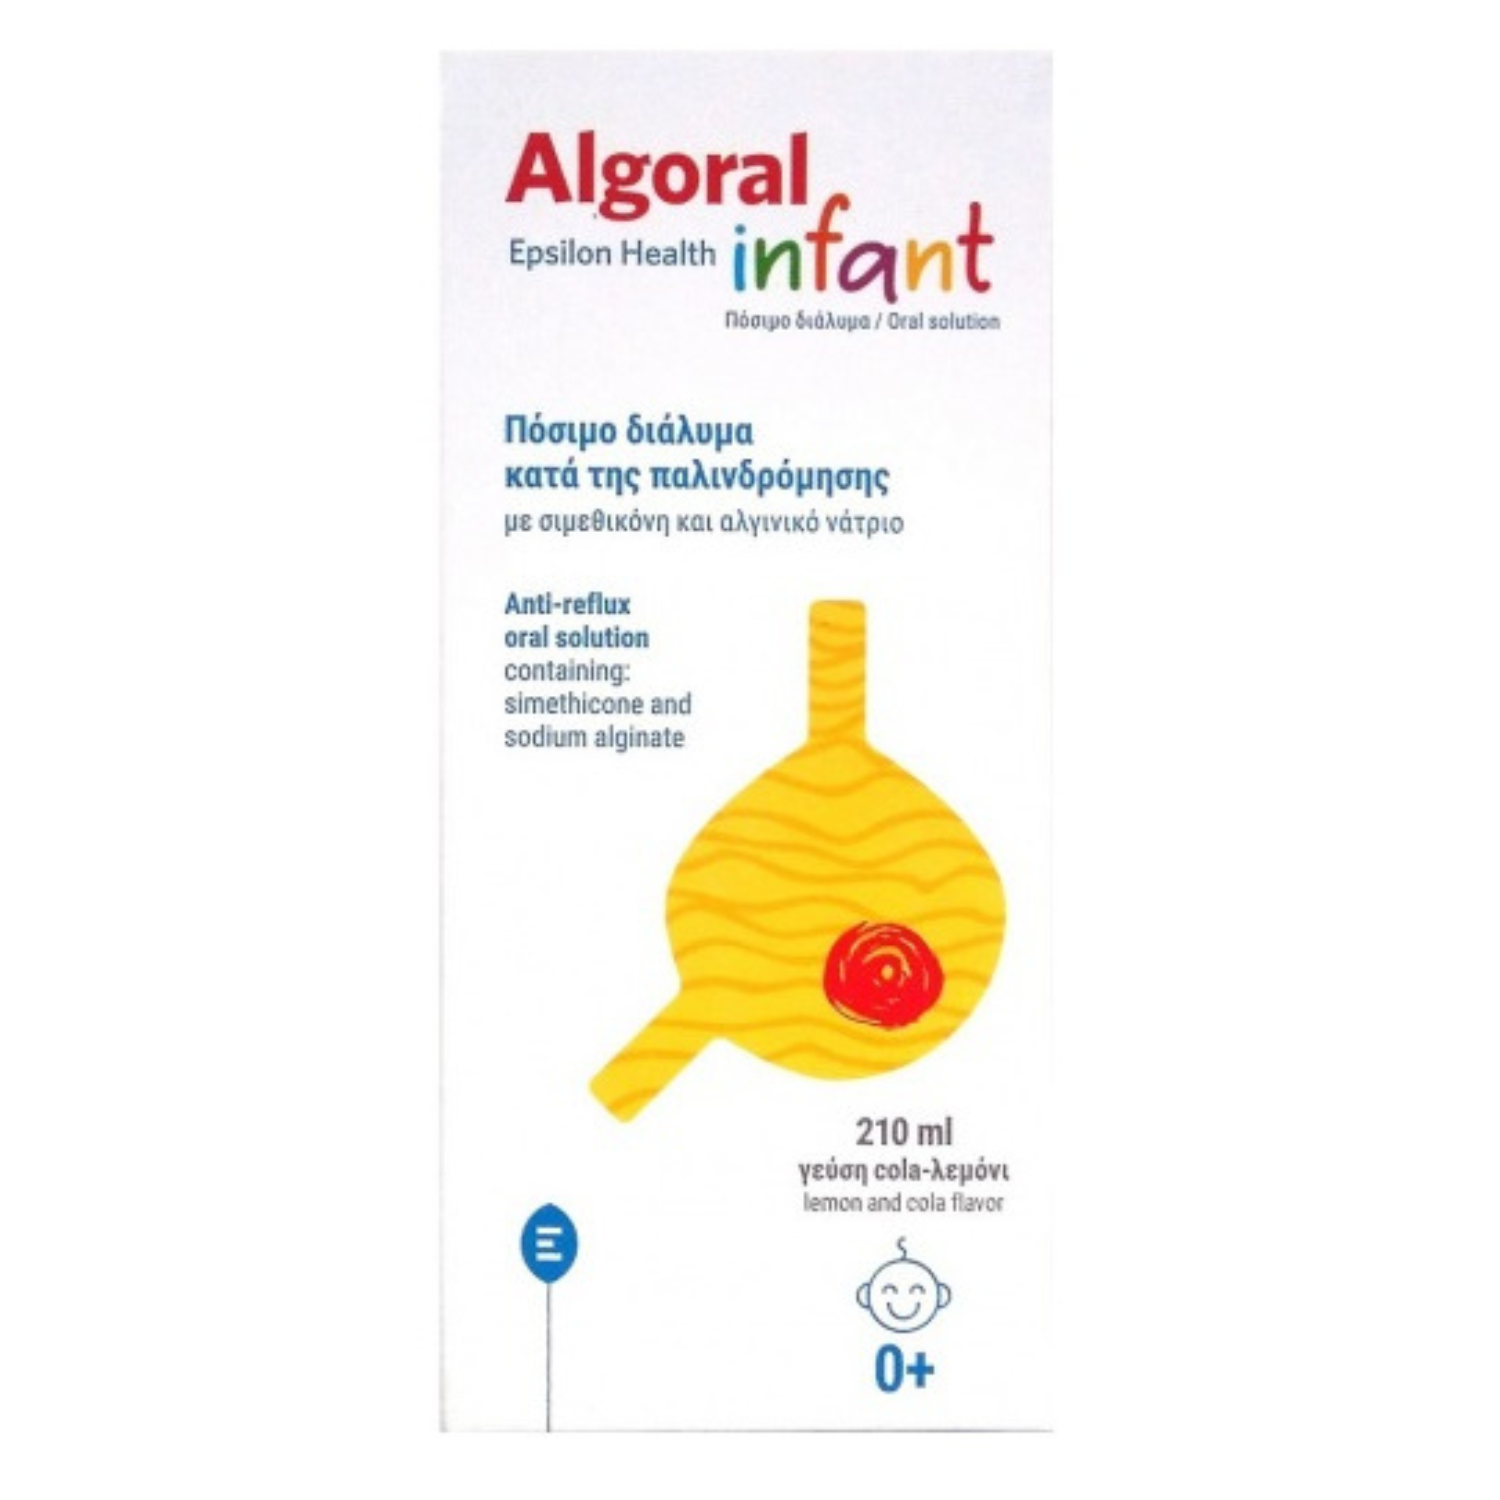 Algoral Infant, 210 ml, Health